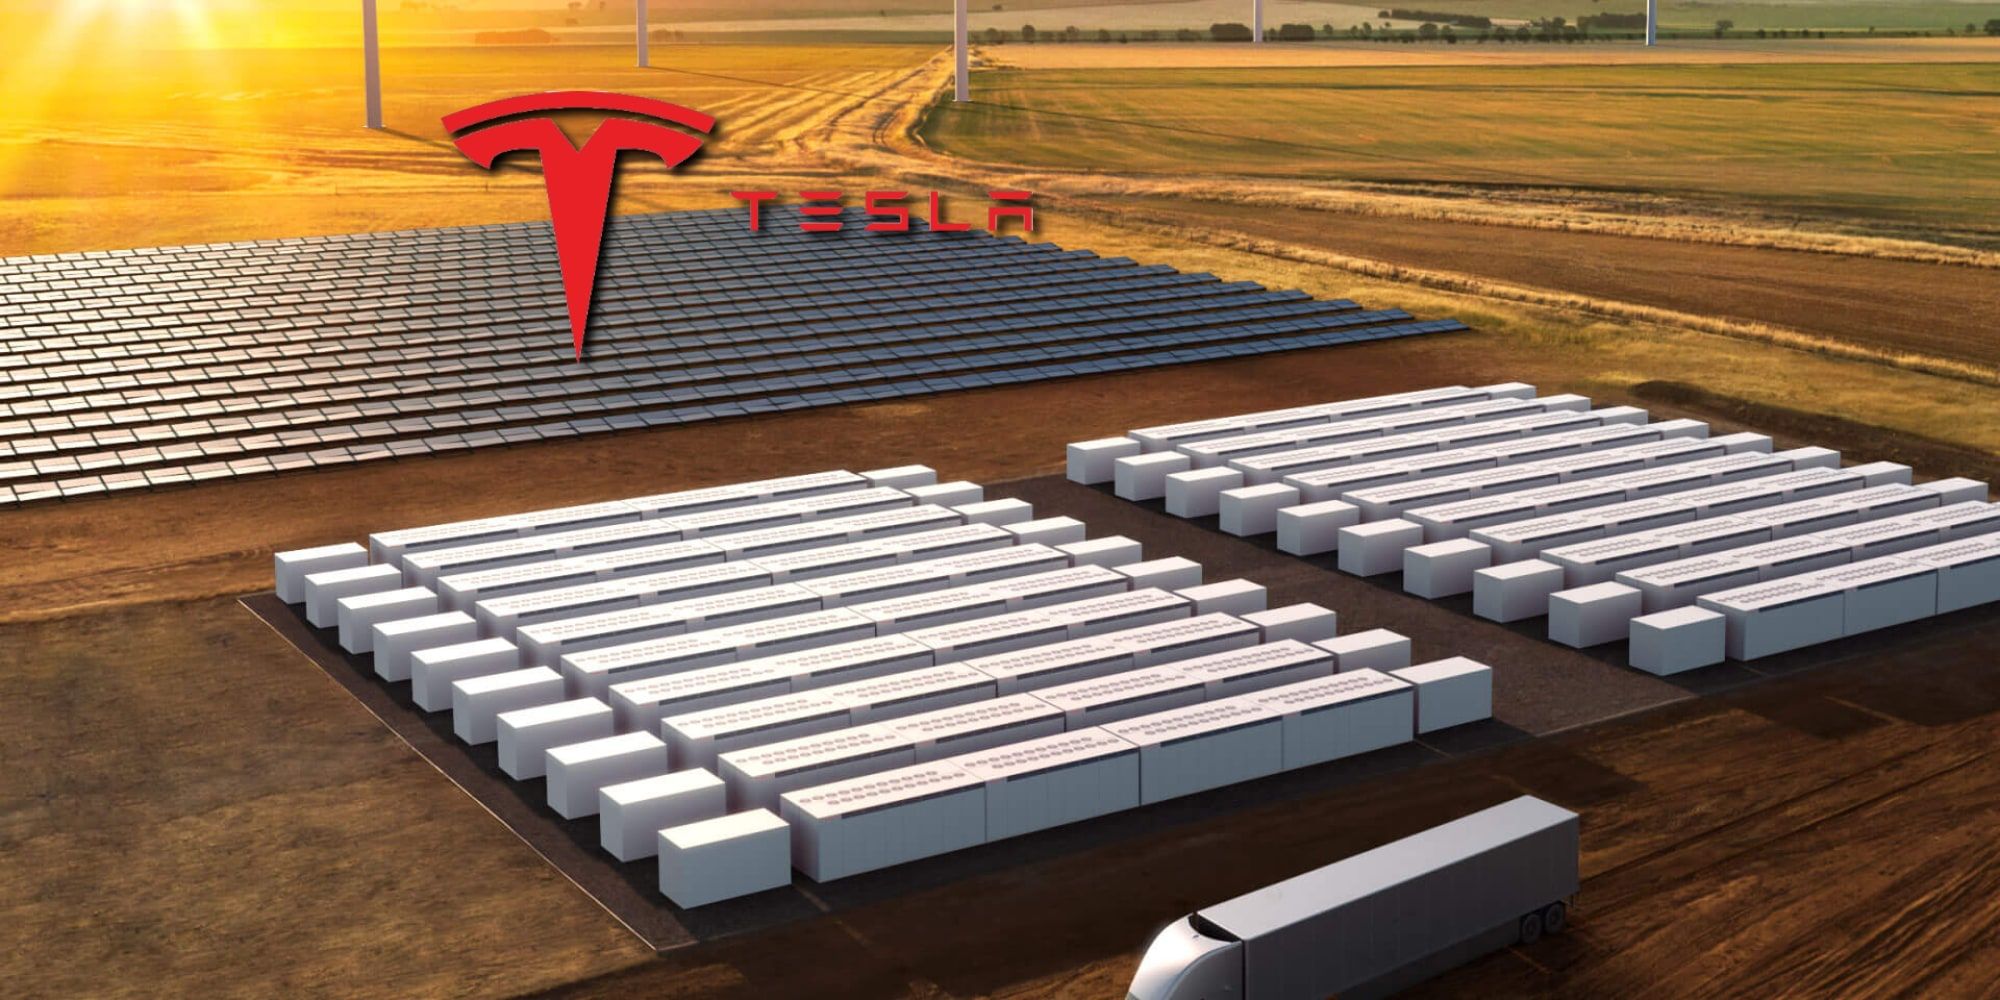 Tesla Megapack Utiltity-Scale Batteries